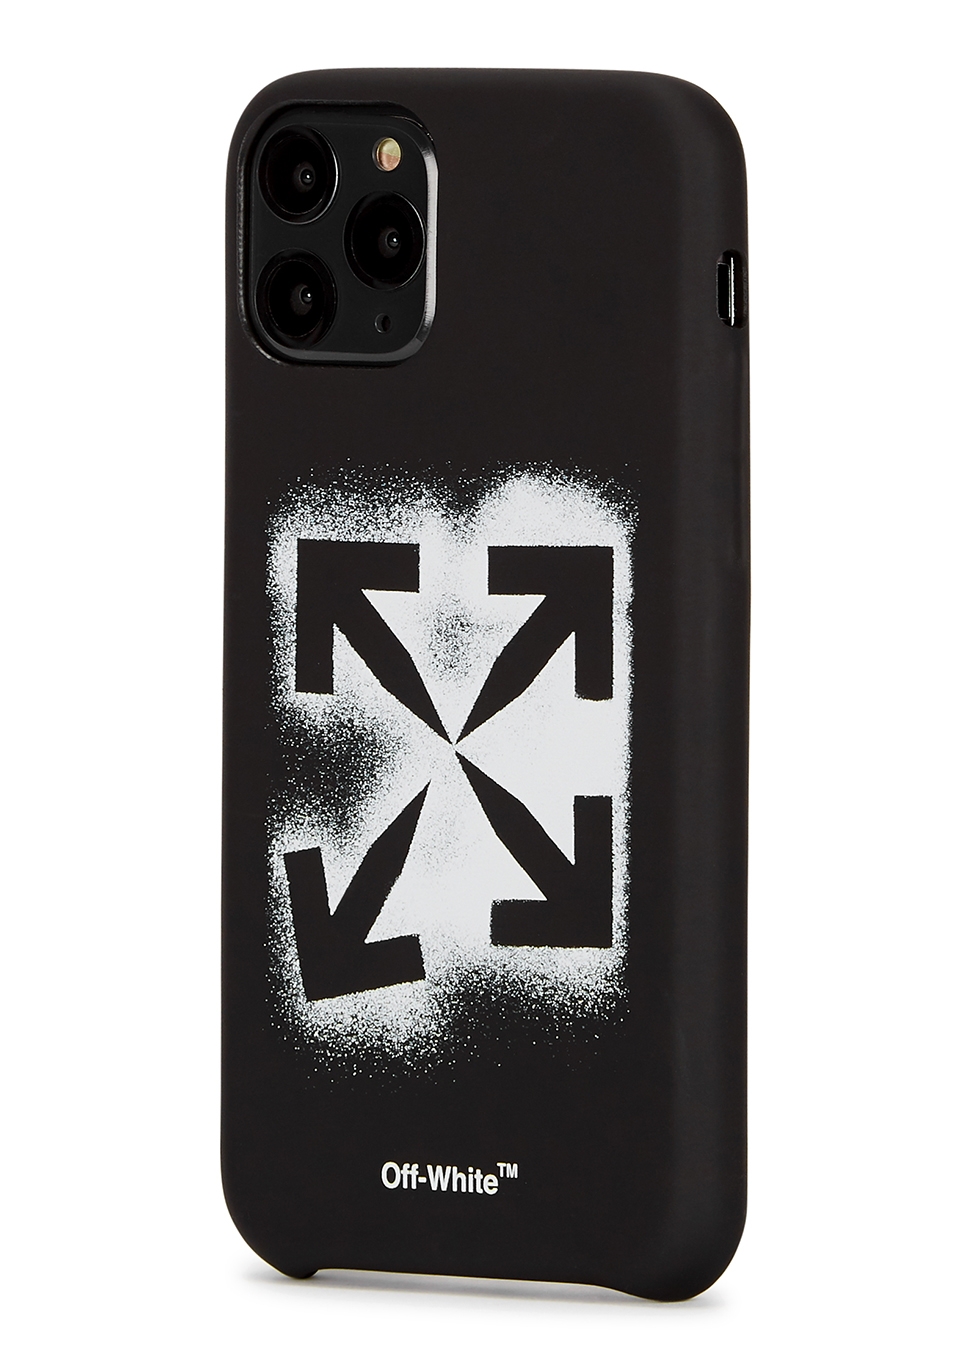 Off-White Stencil printed iPhone 11 Pro case - Harvey Nichols